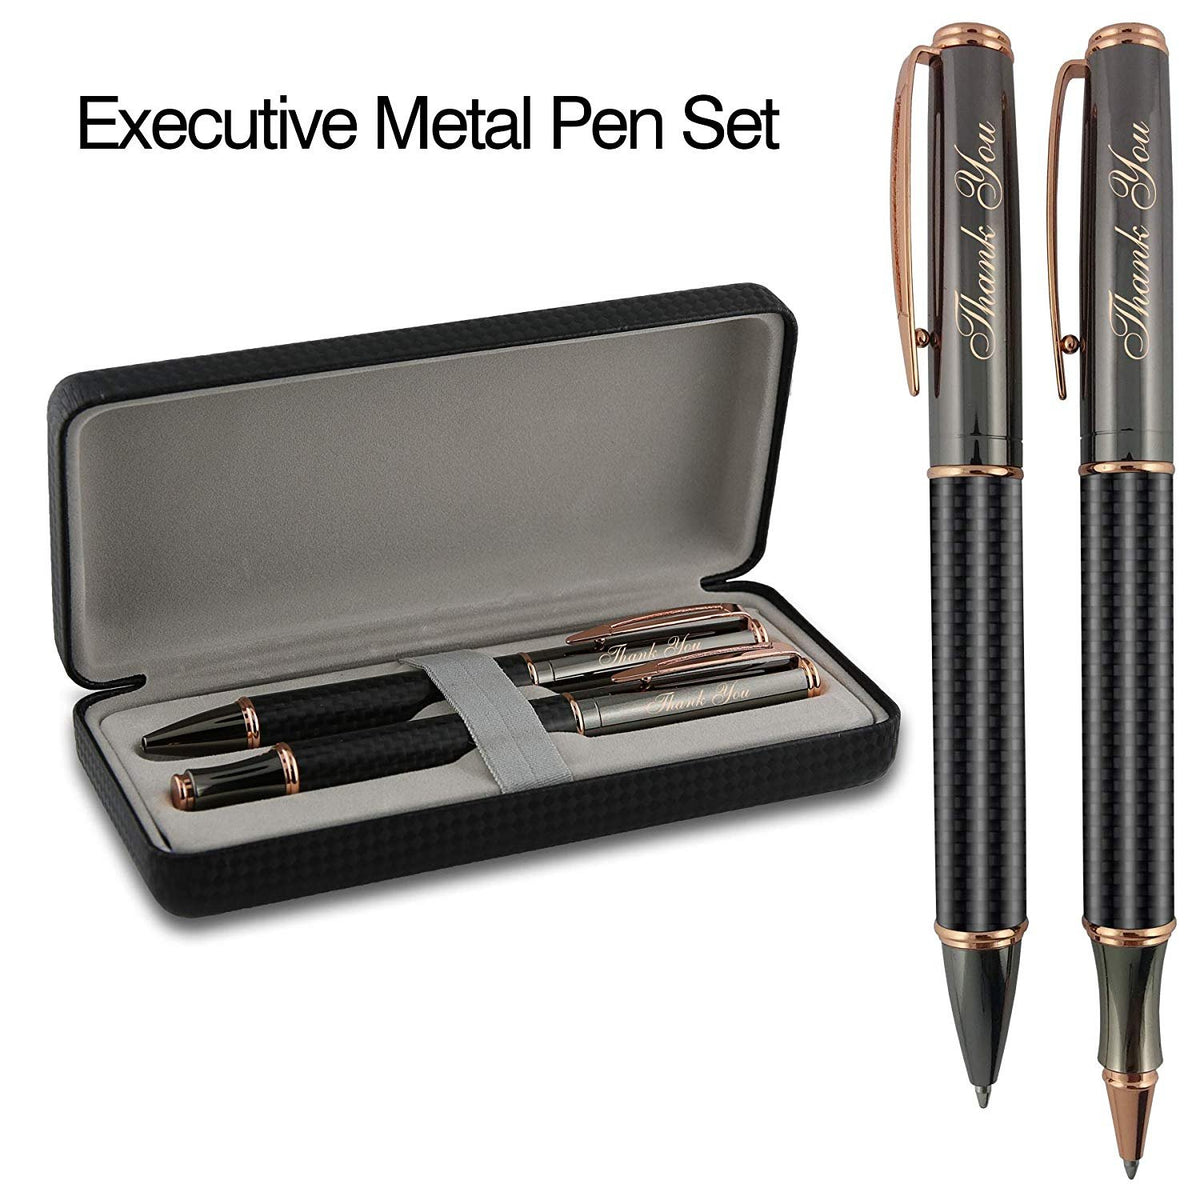 Slim Executive Metal Pen with Stylus